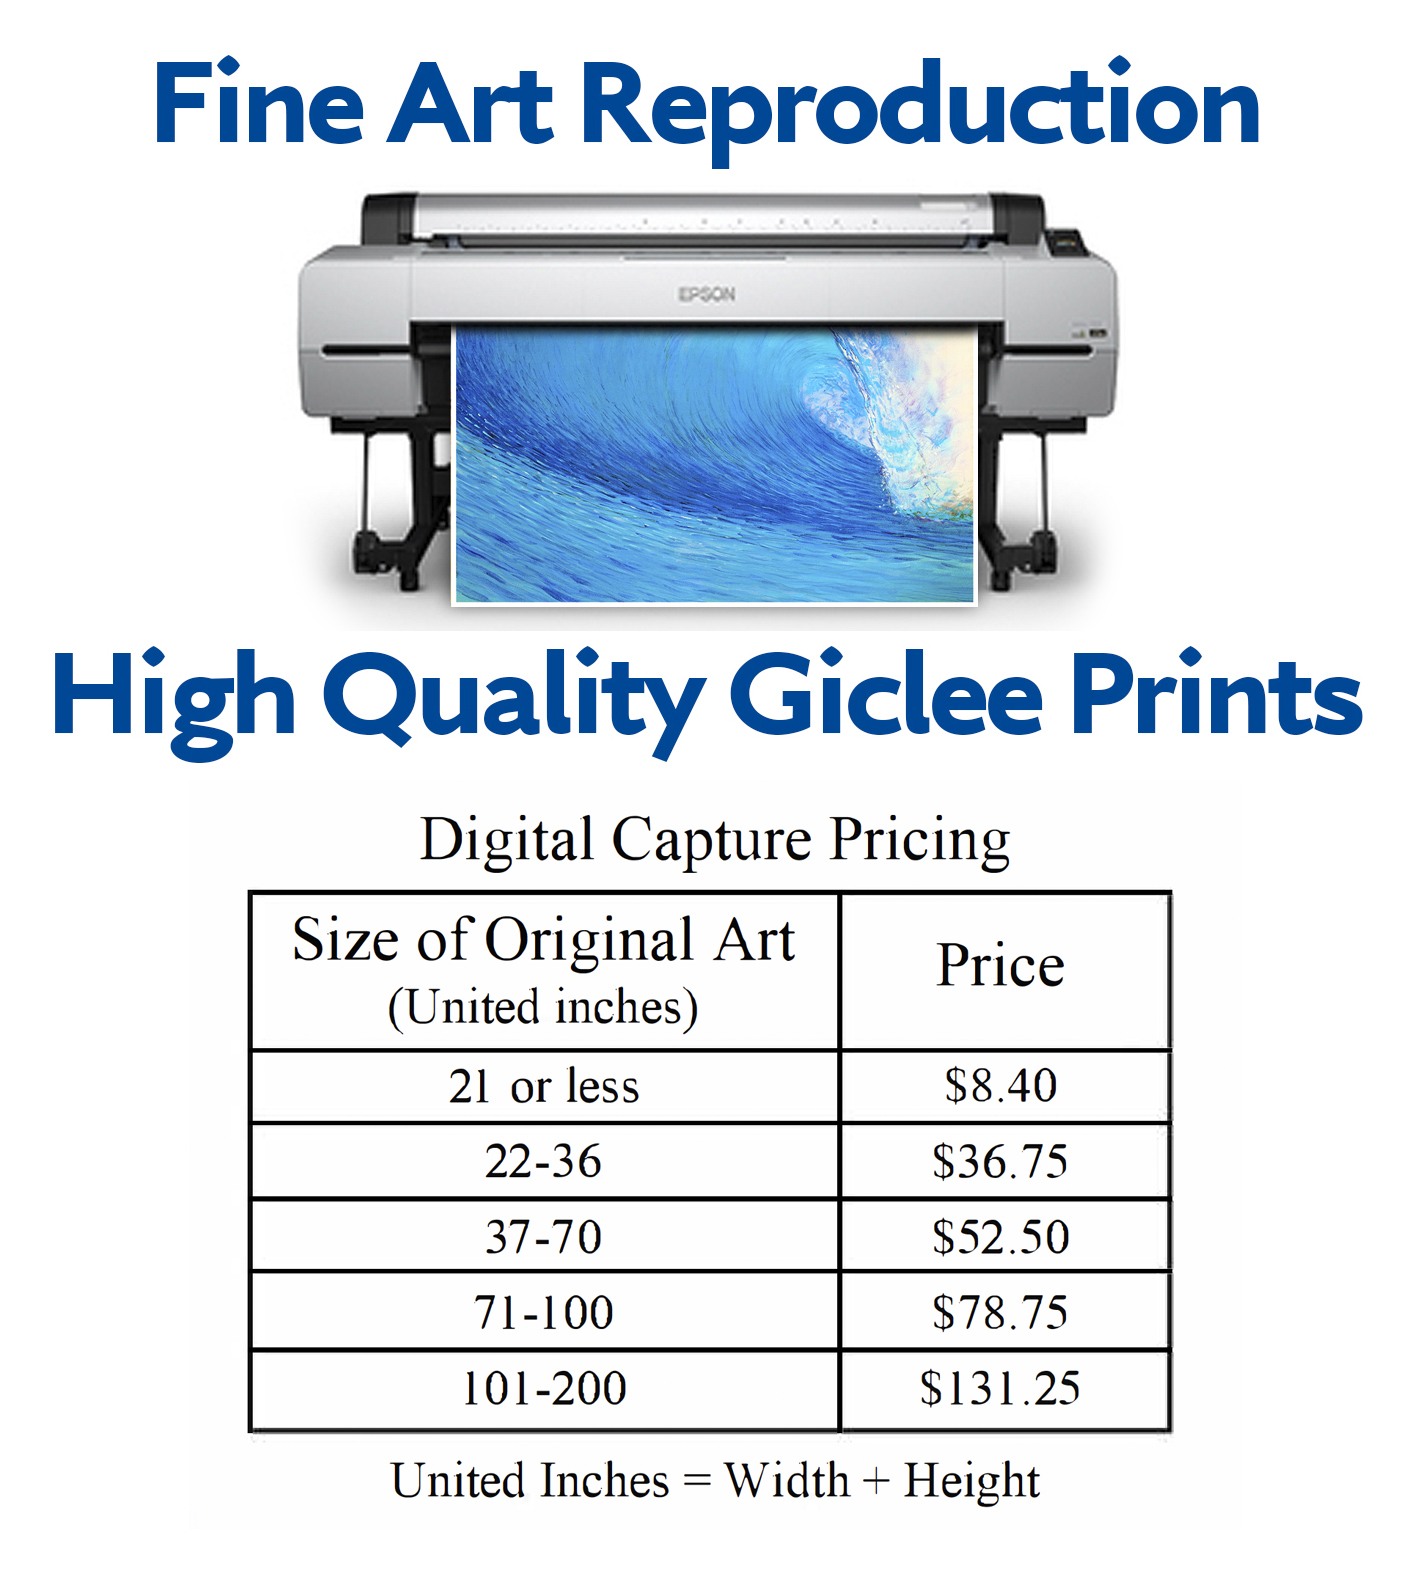 Photo Prints | Photo Printing Services Online